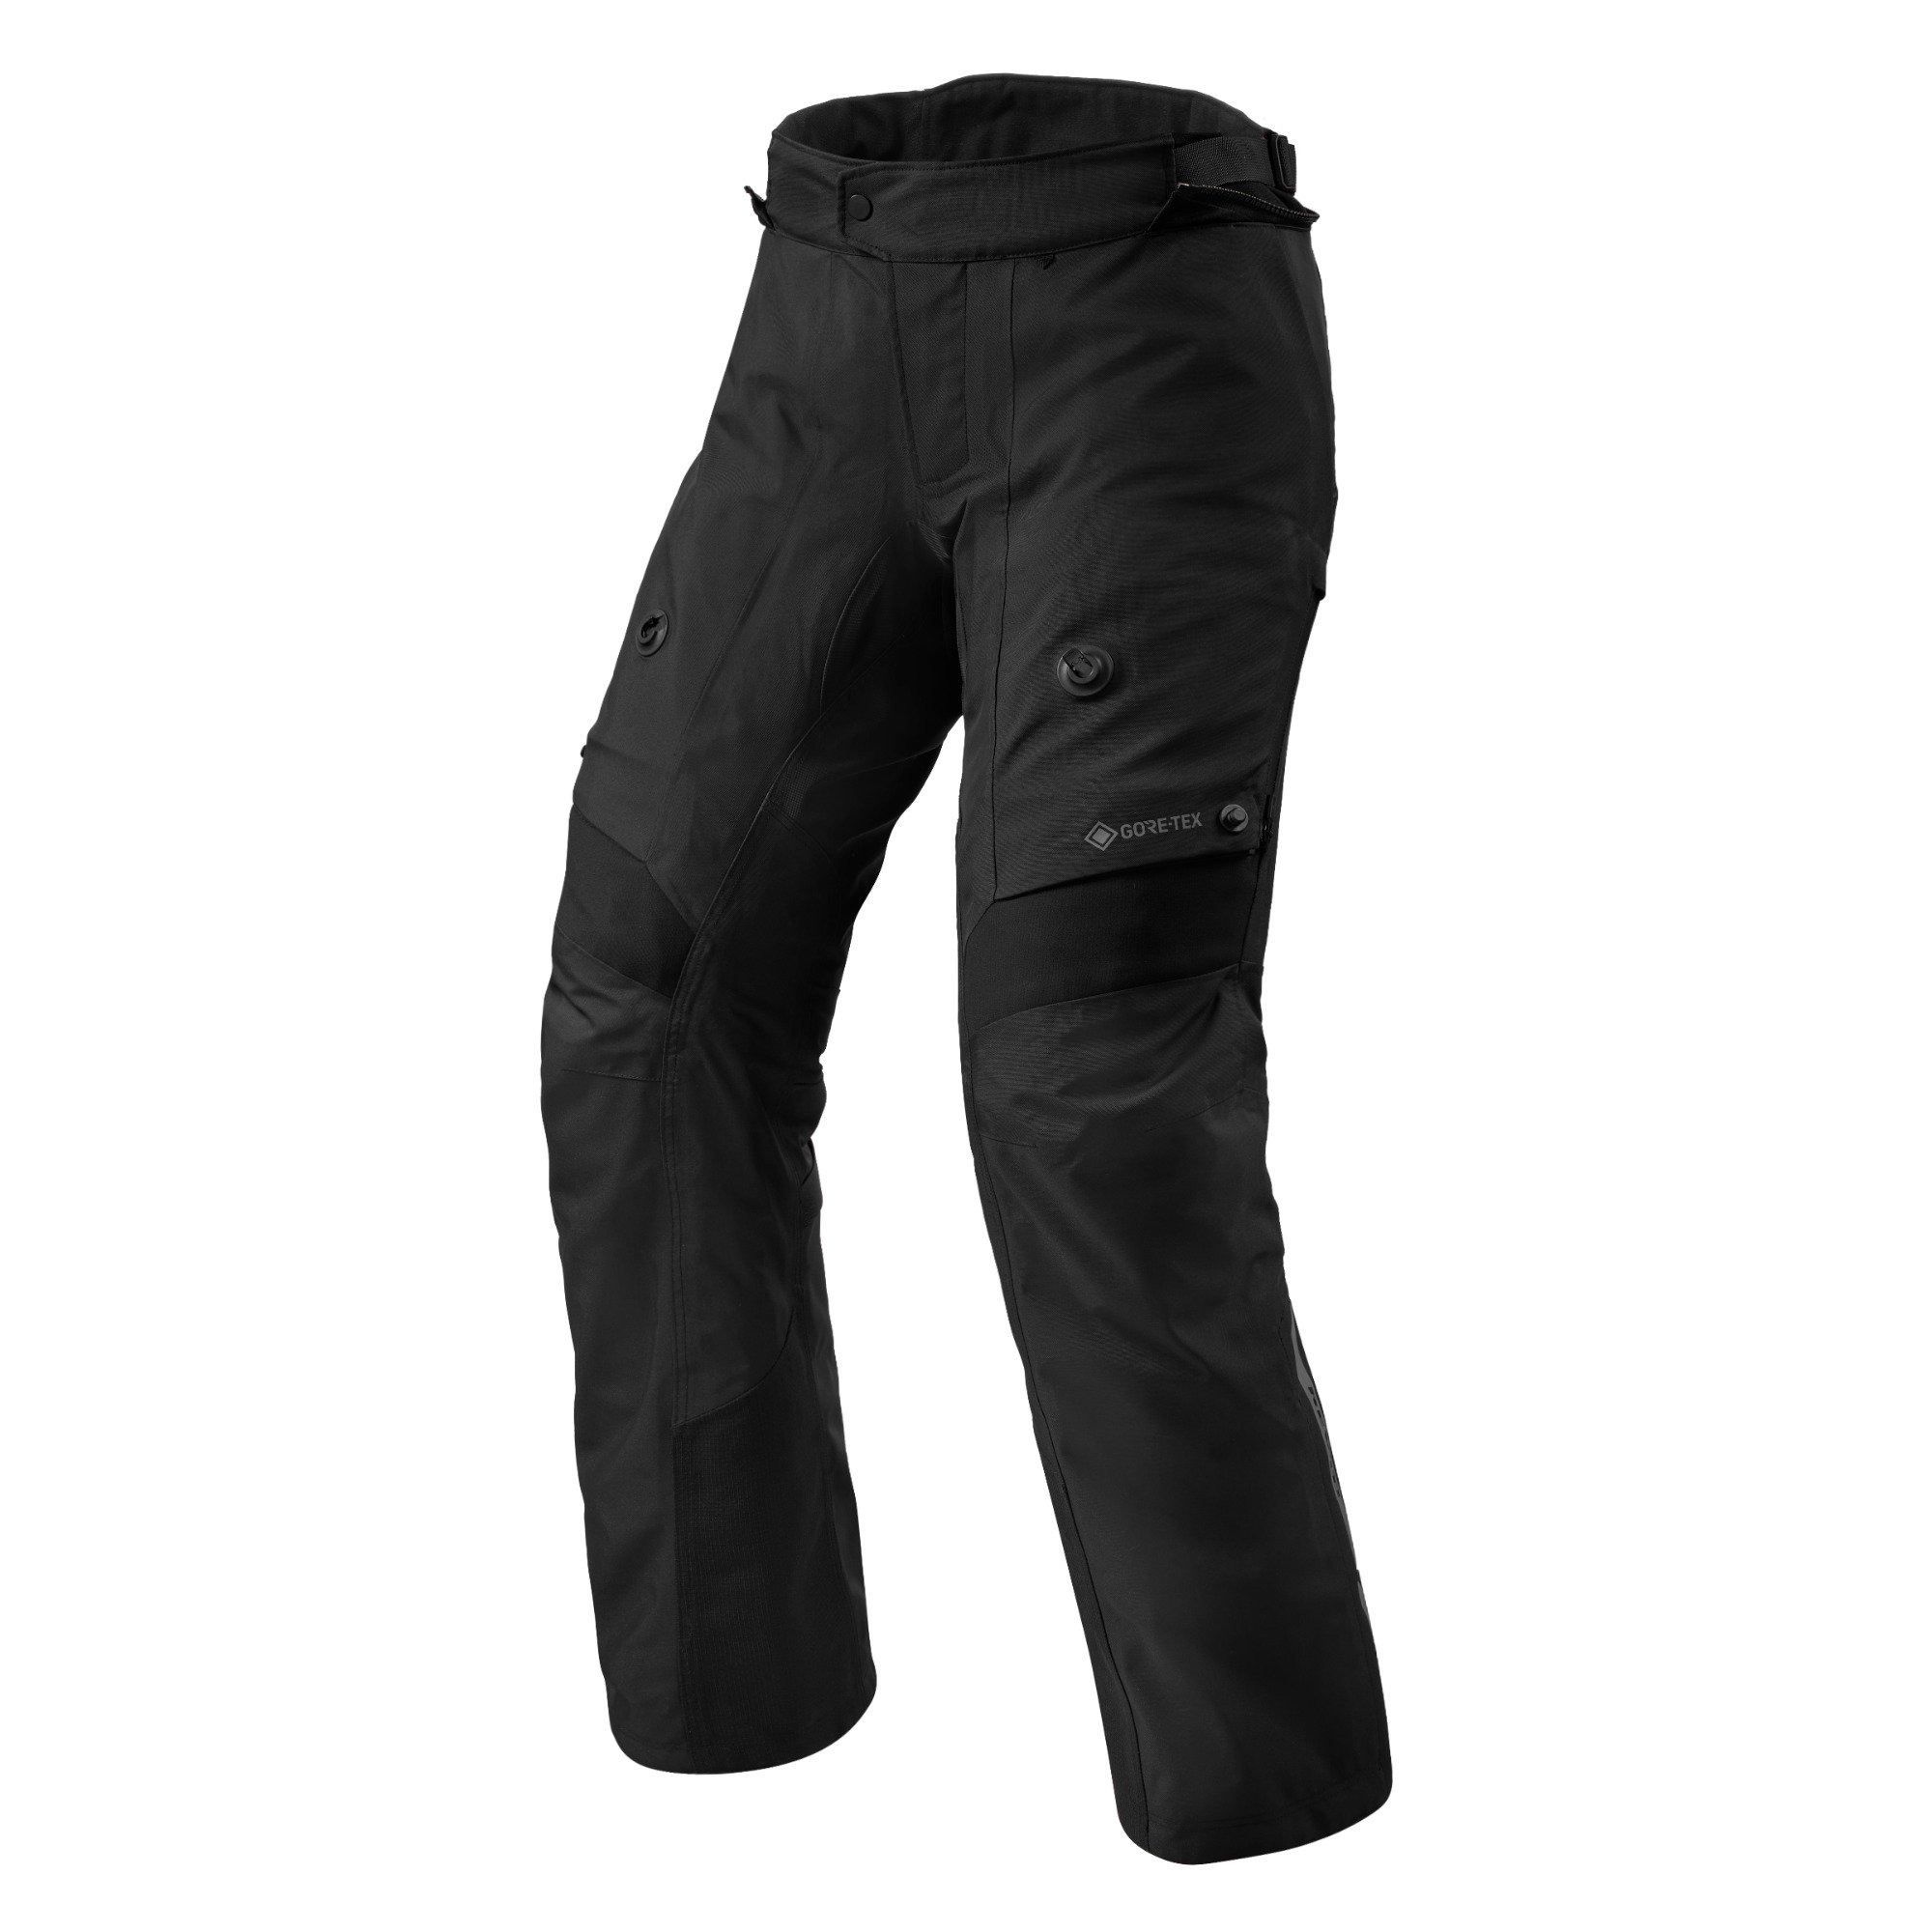 Image of REV'IT! Pants Poseidon 3 GTX Black Short Motorcycle Pants Size 2XL ID 8700001362535